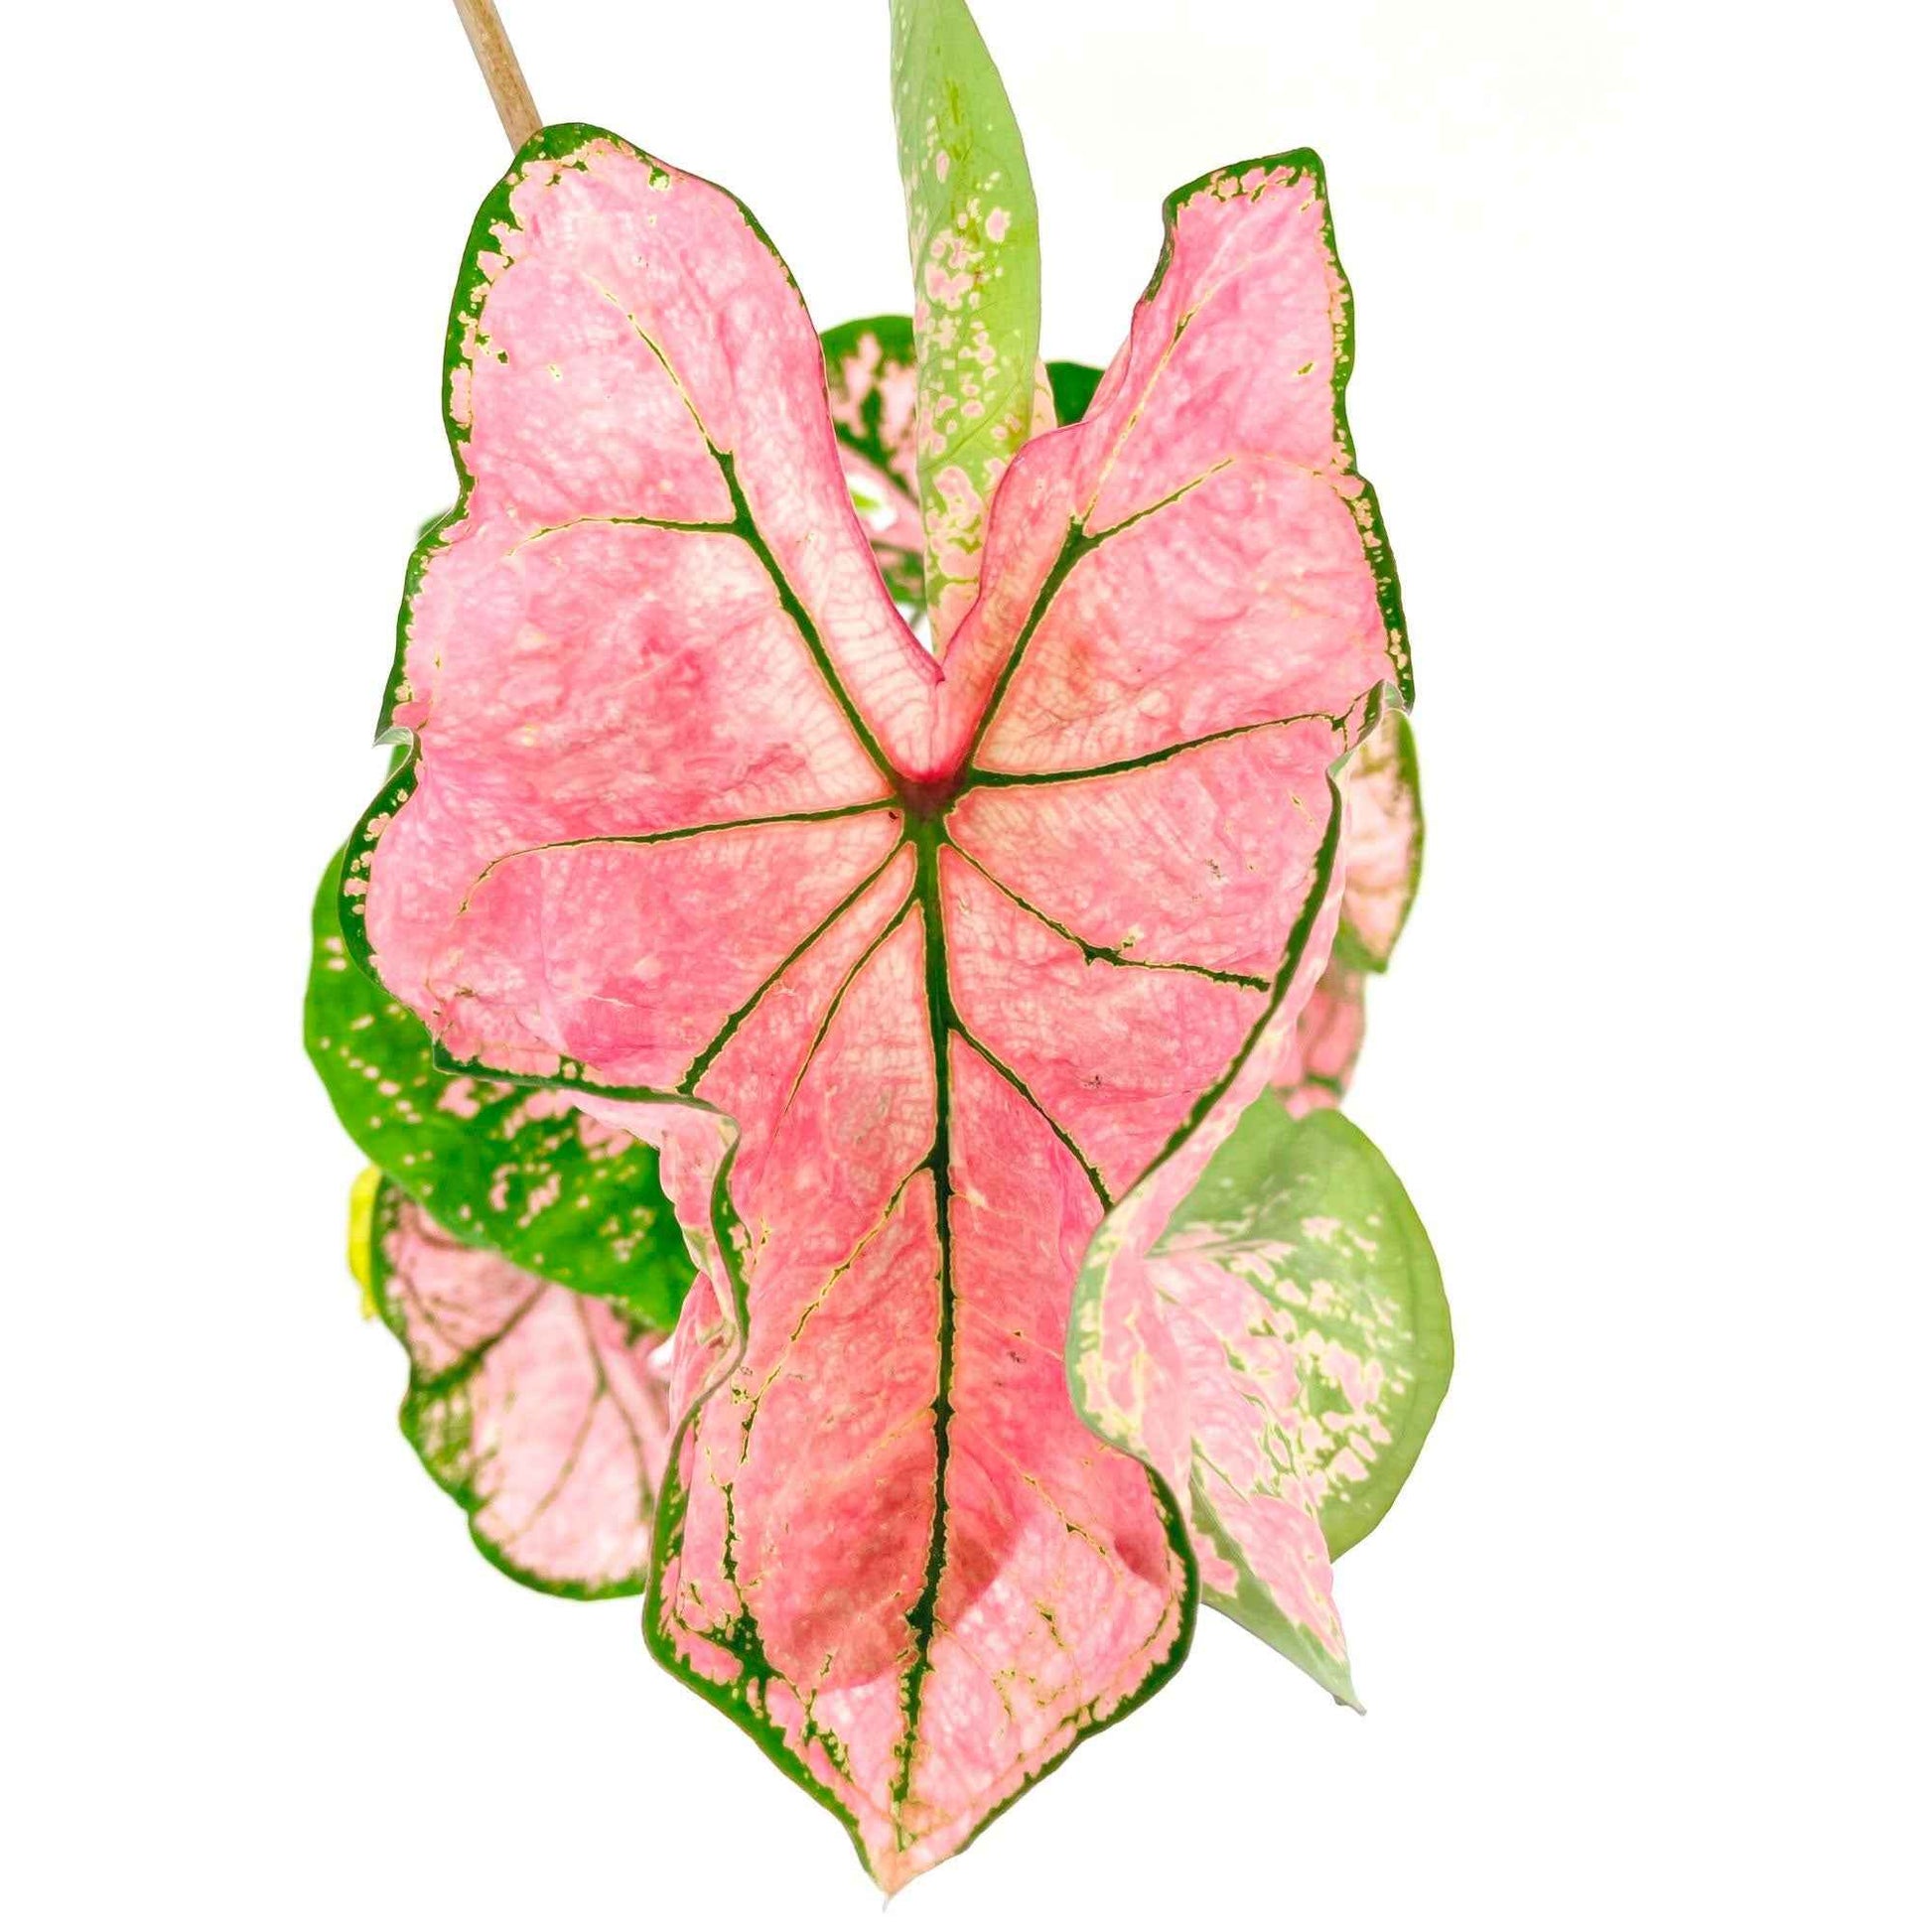 4x Caladium - Mix rood-roze-wit incl. sierpot - Binnenplant in pot cadeau